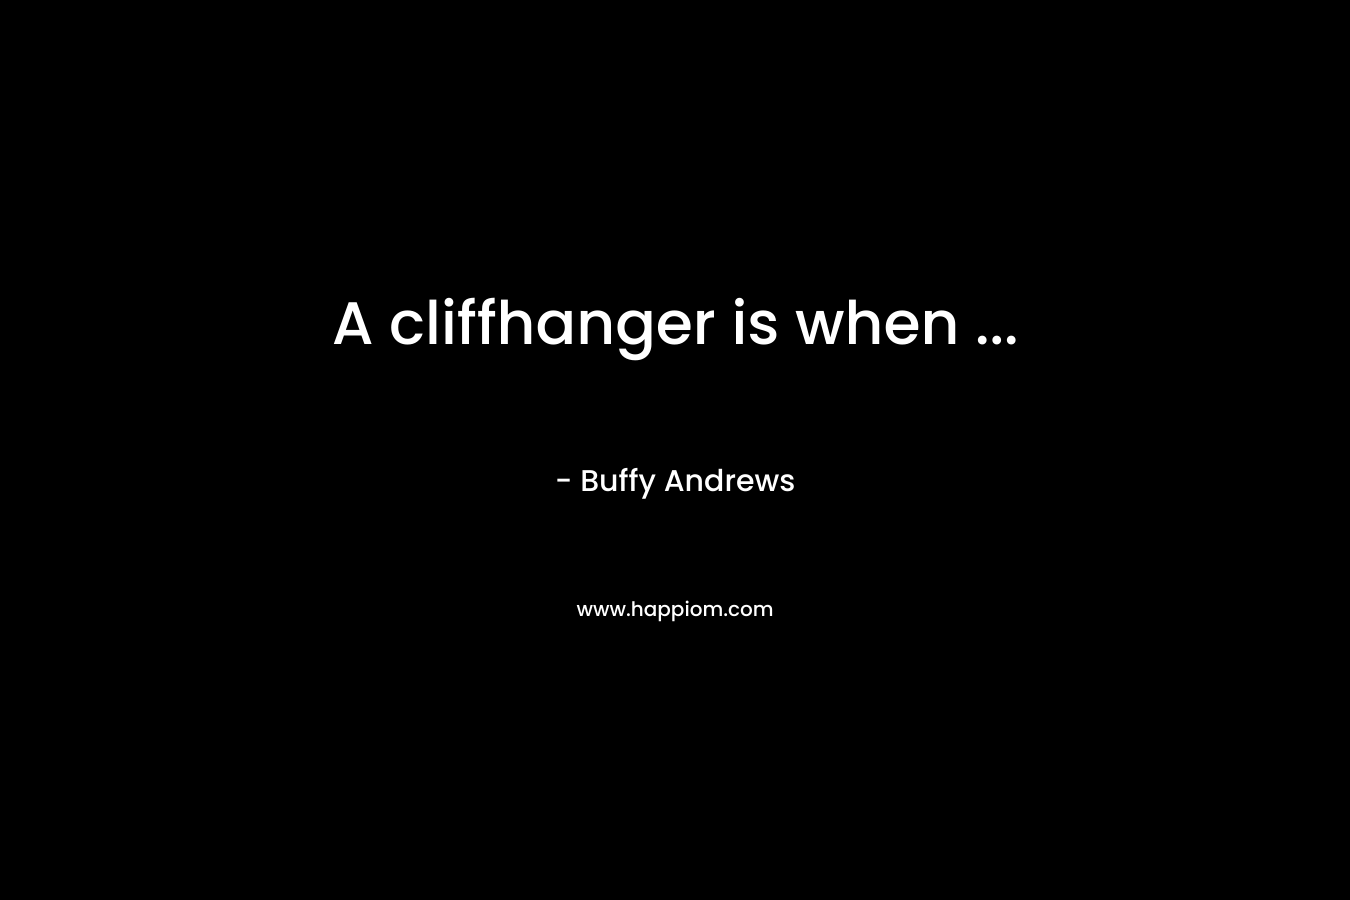 A cliffhanger is when ...